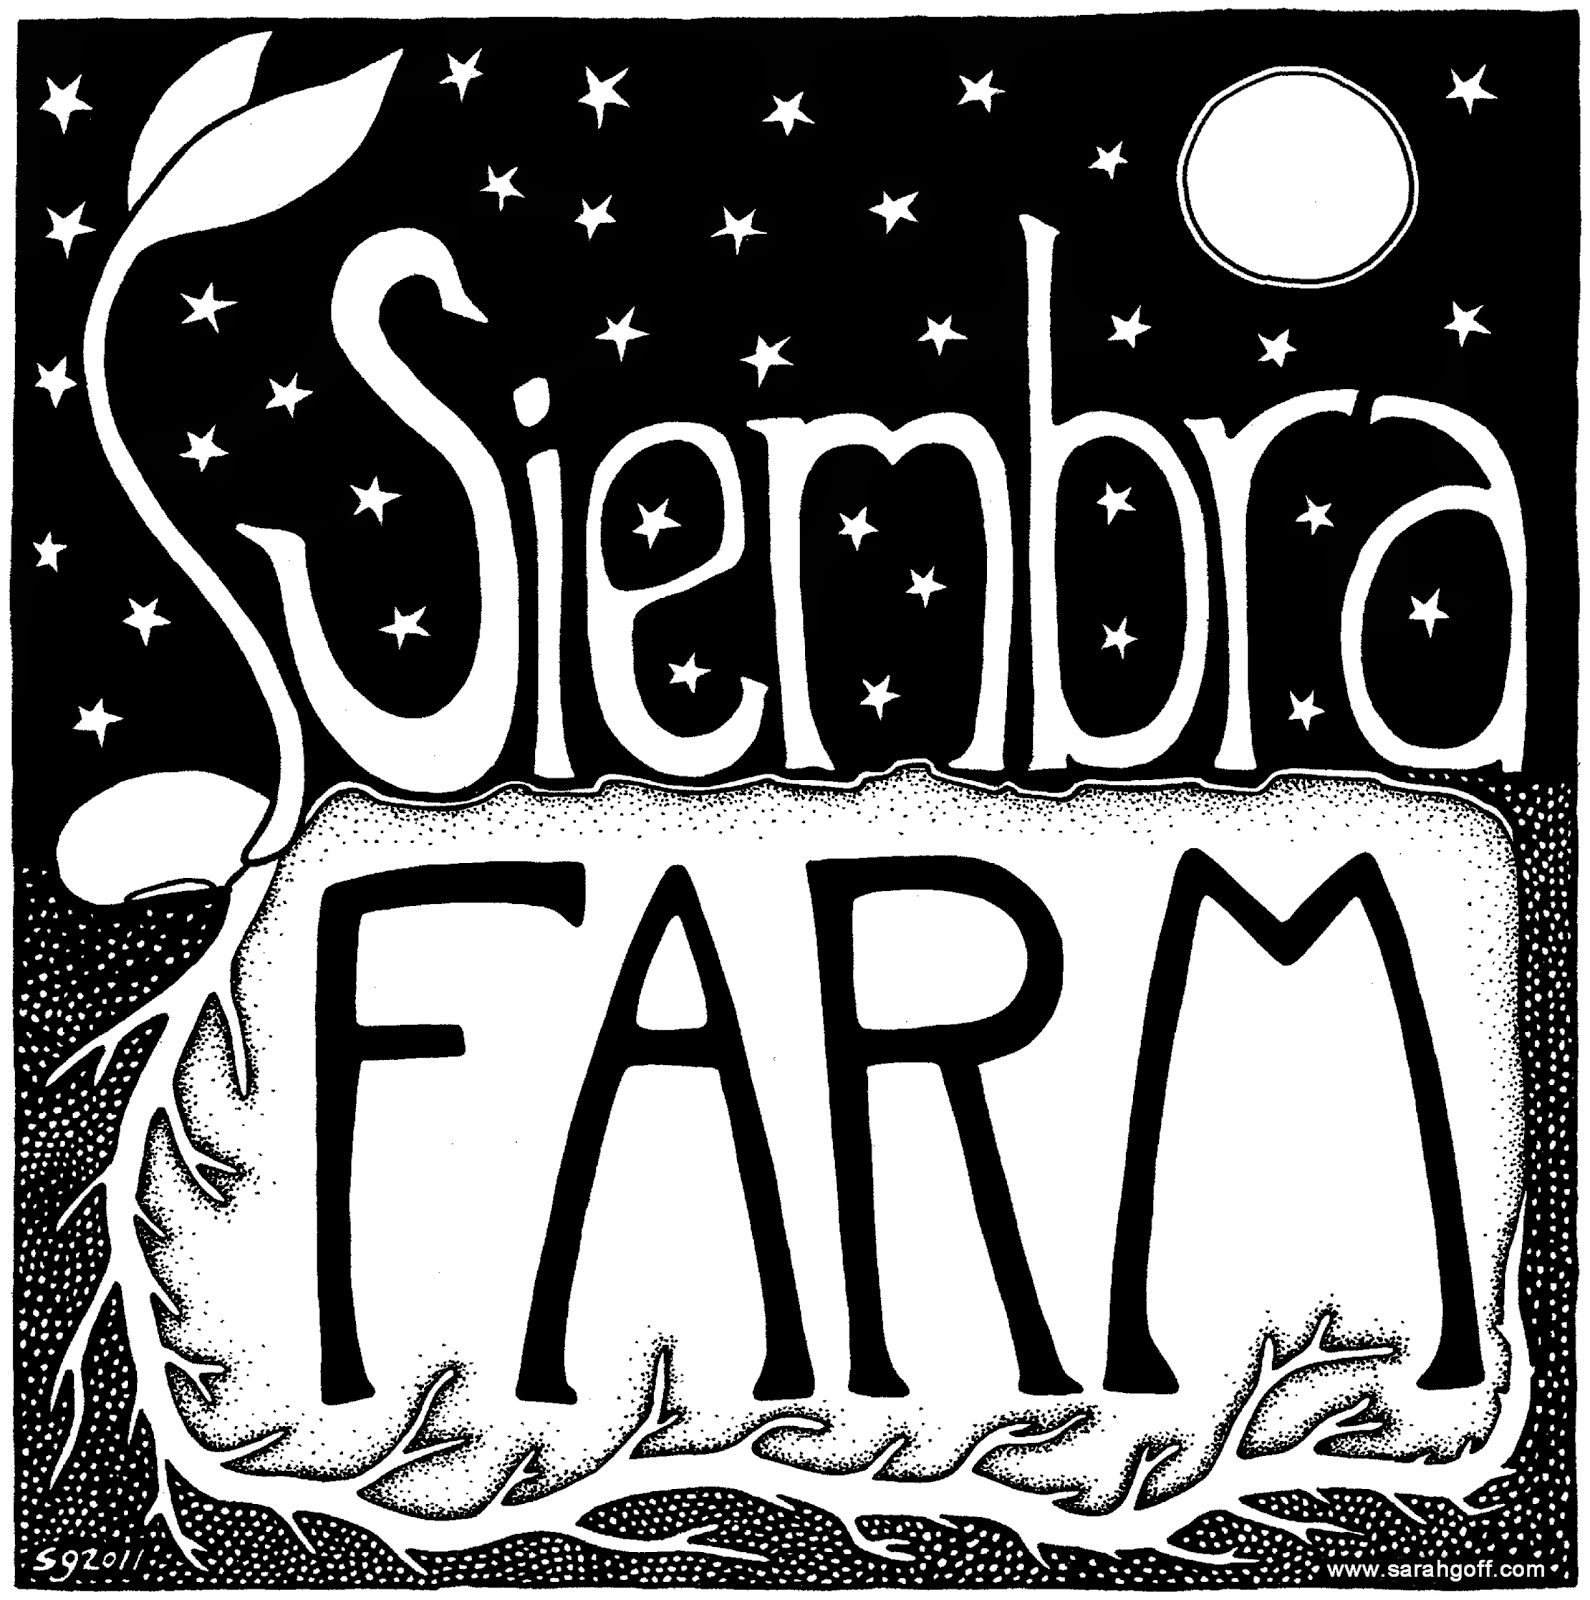 Siembra Farm_logo 1.jpg